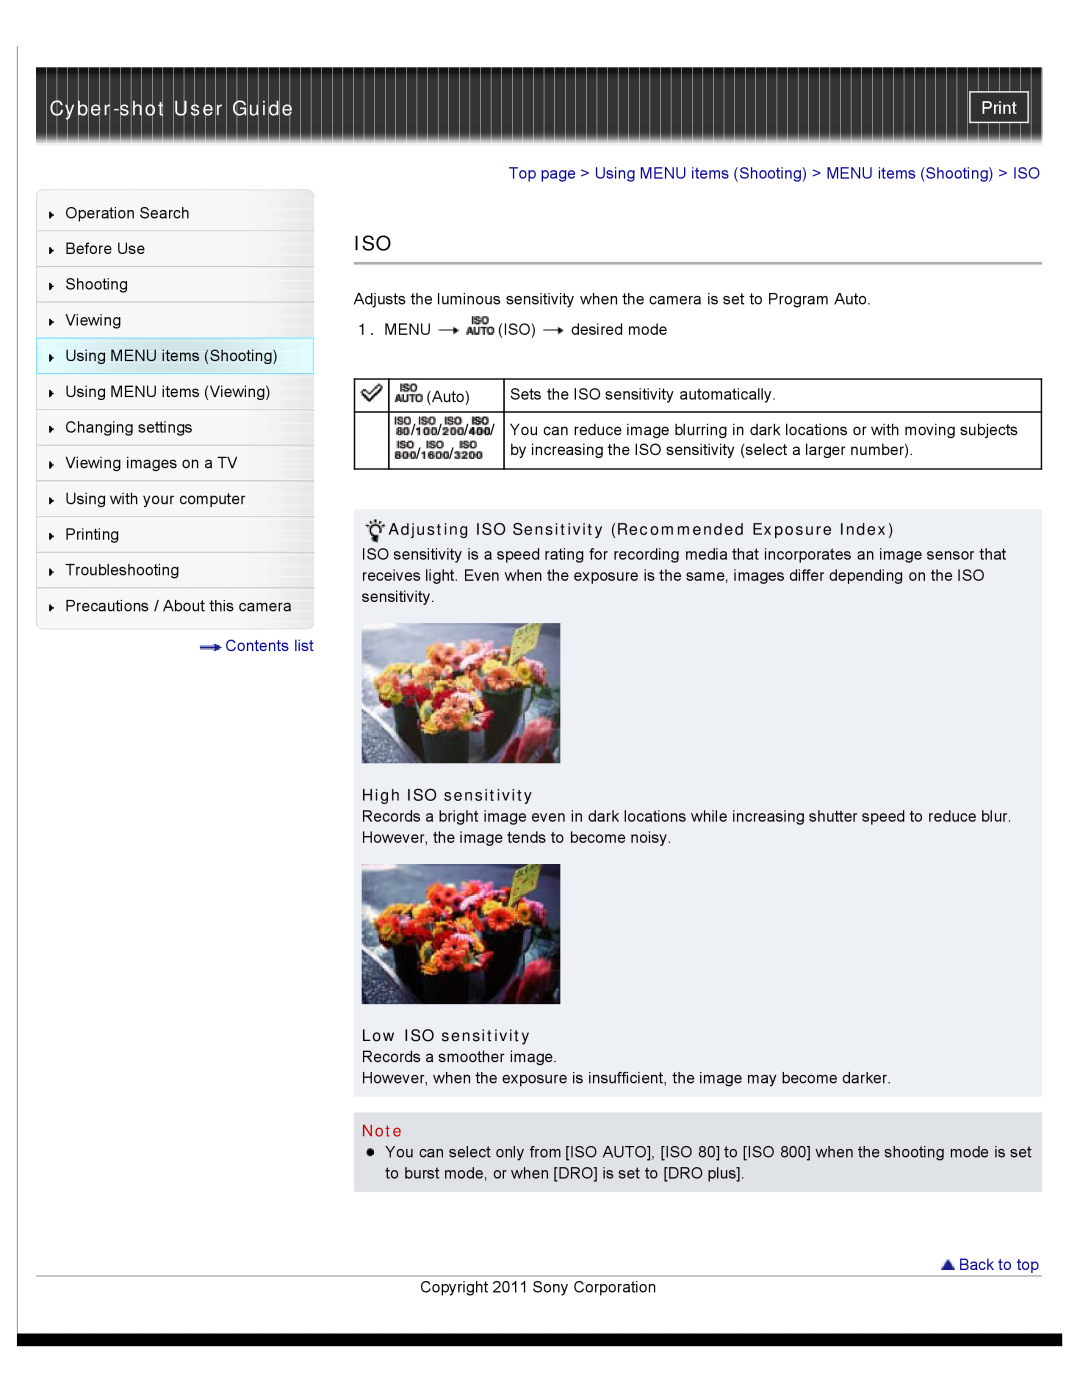 Sony DSC-W510 Cyber-shot User Guide, Print, Top page Using MENU items Shooting MENU items Shooting ISO, Contents list 